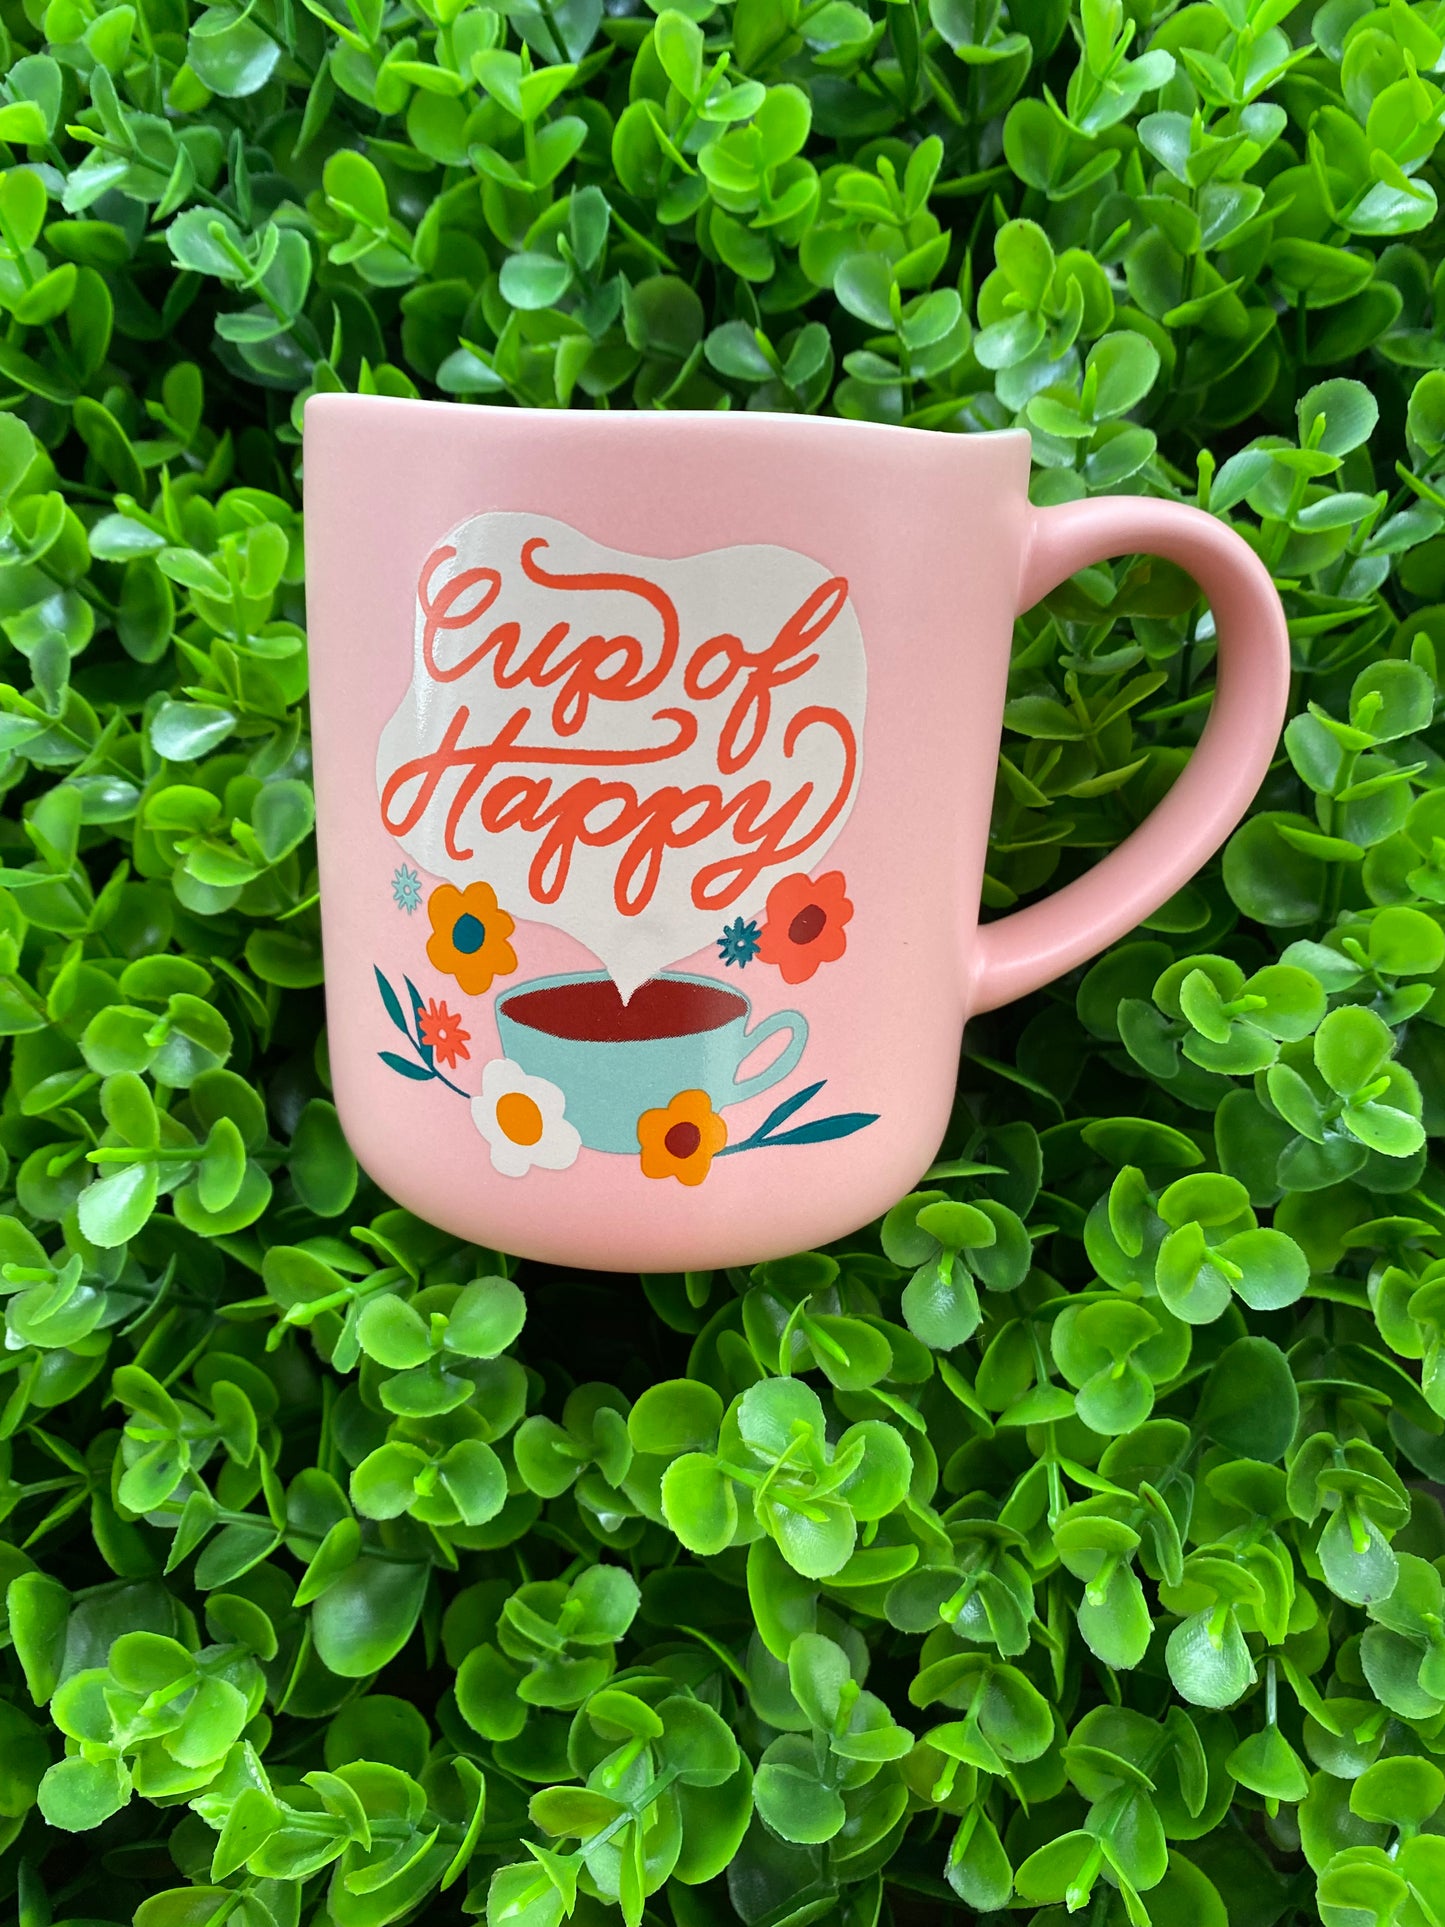 Mug: Cup of Happy